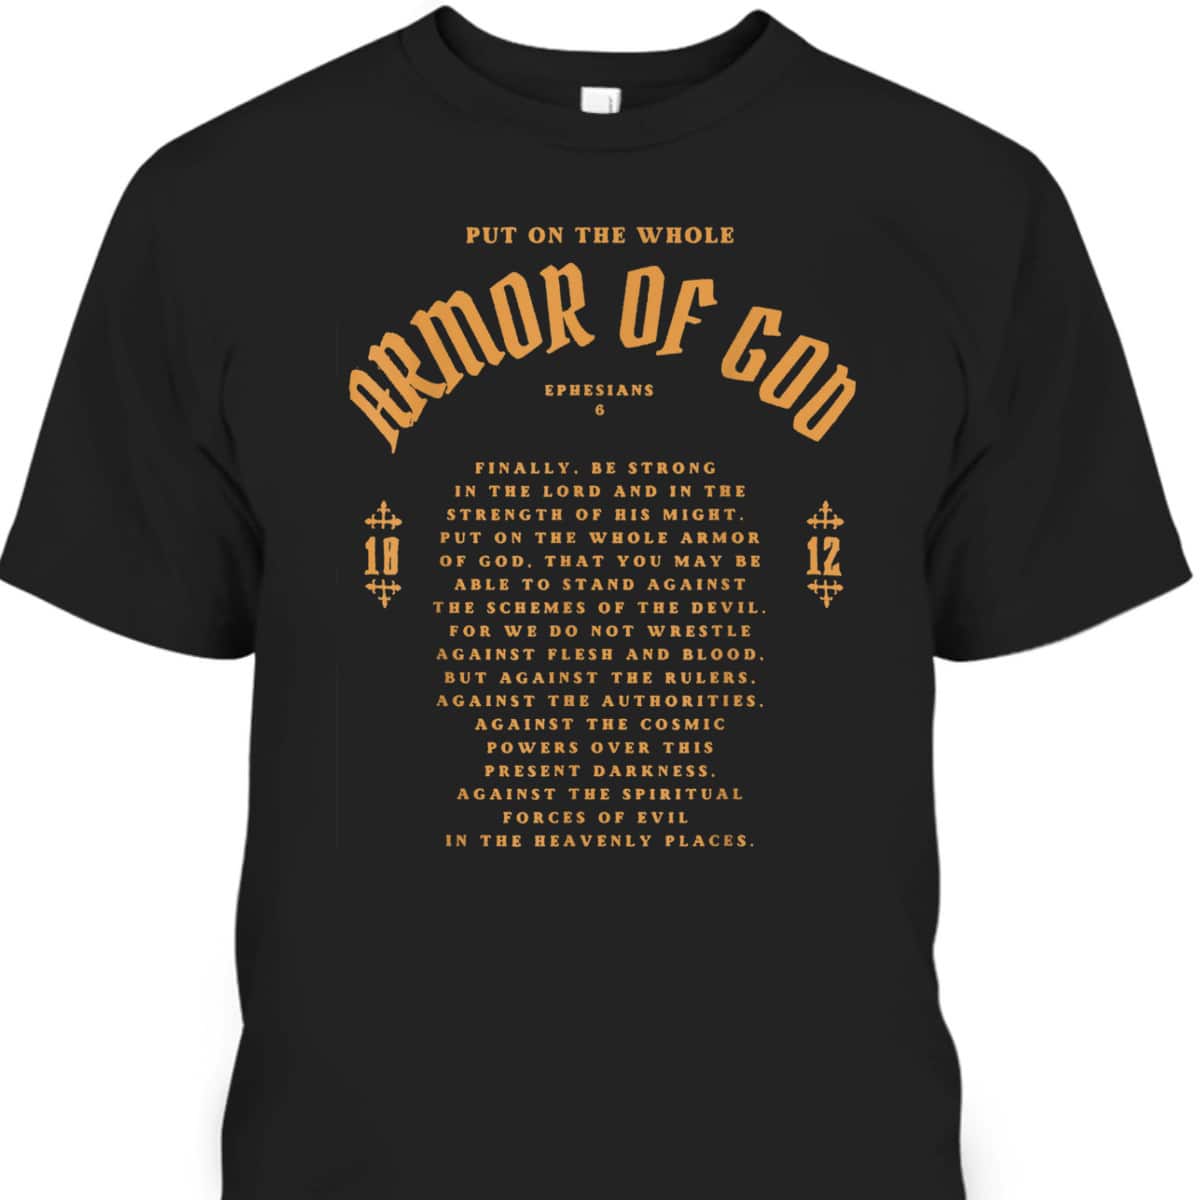 Put On The Whole Armor Of God T-Shirt Christian Bible Verse Ephesians 6